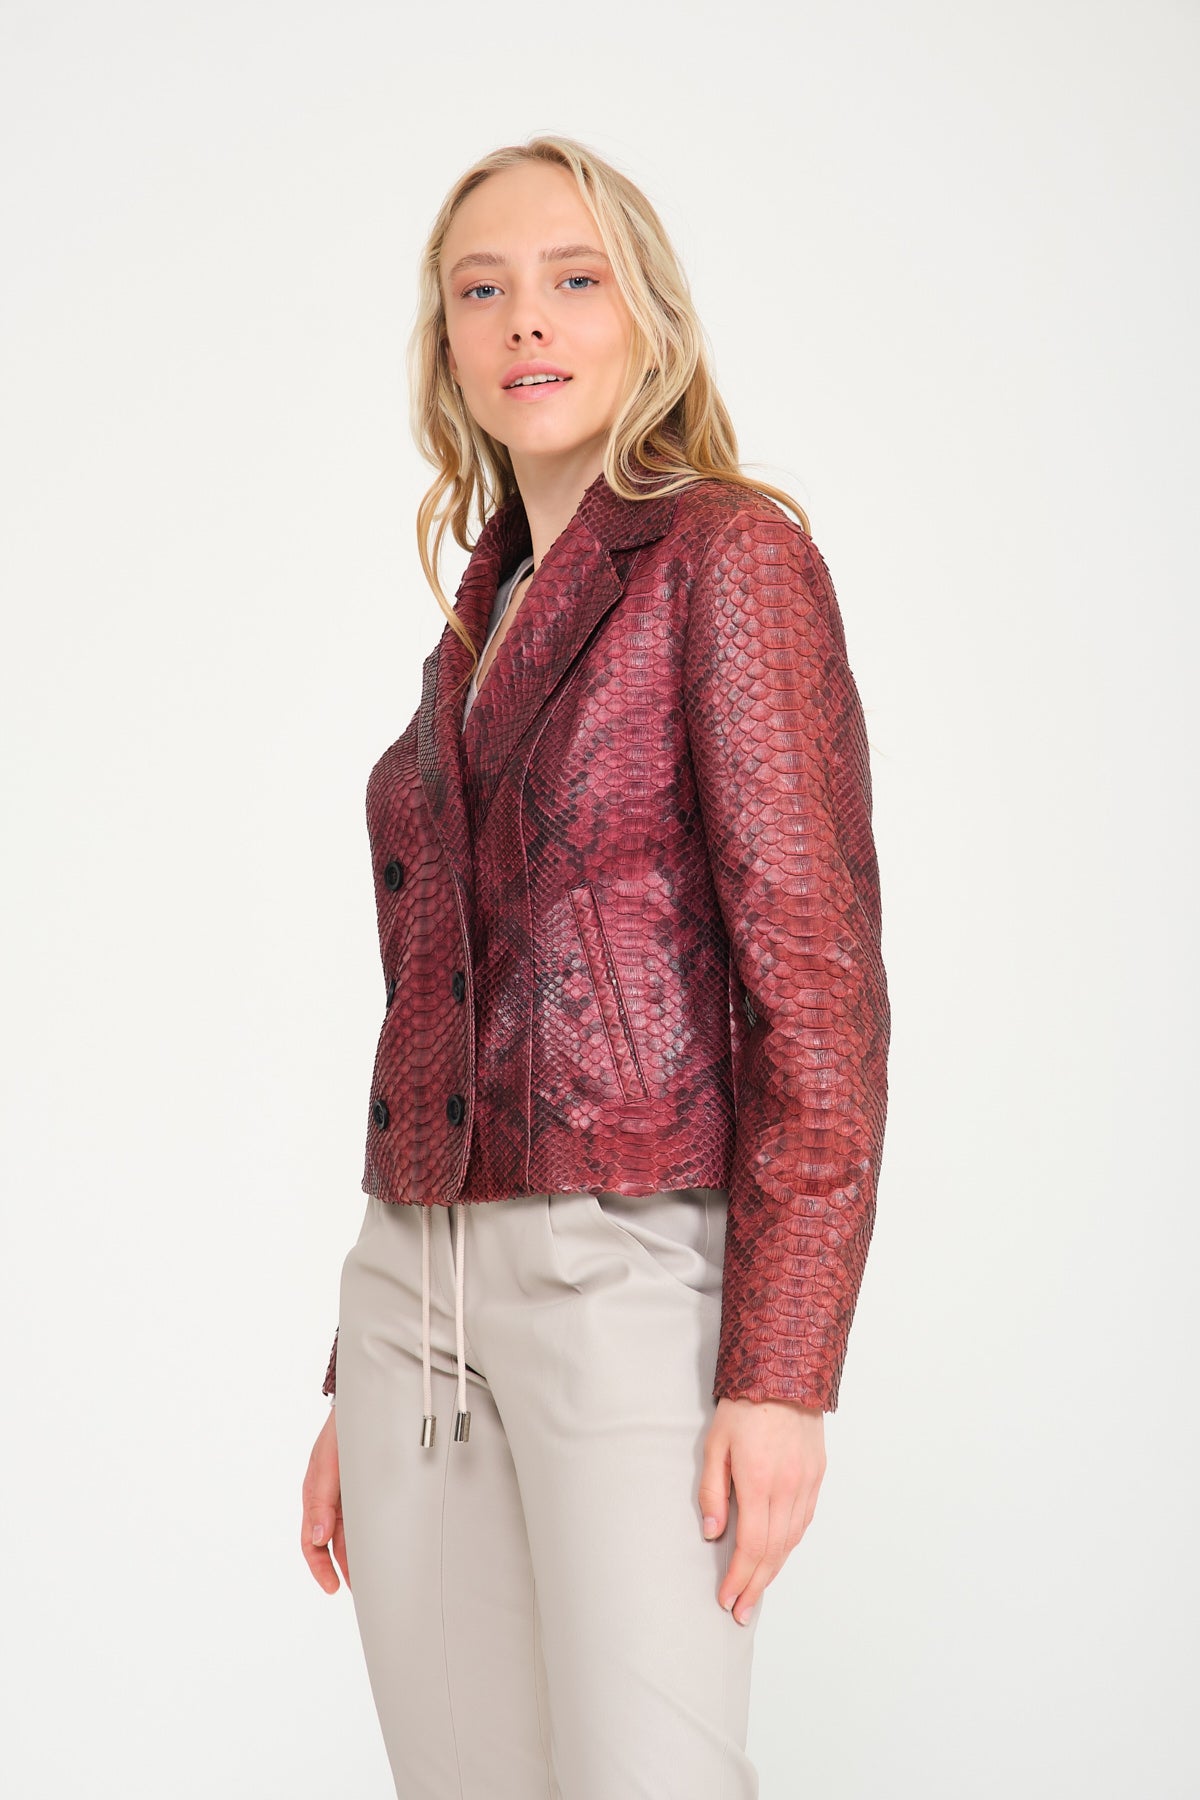 Burgundy Python Leather Jacket